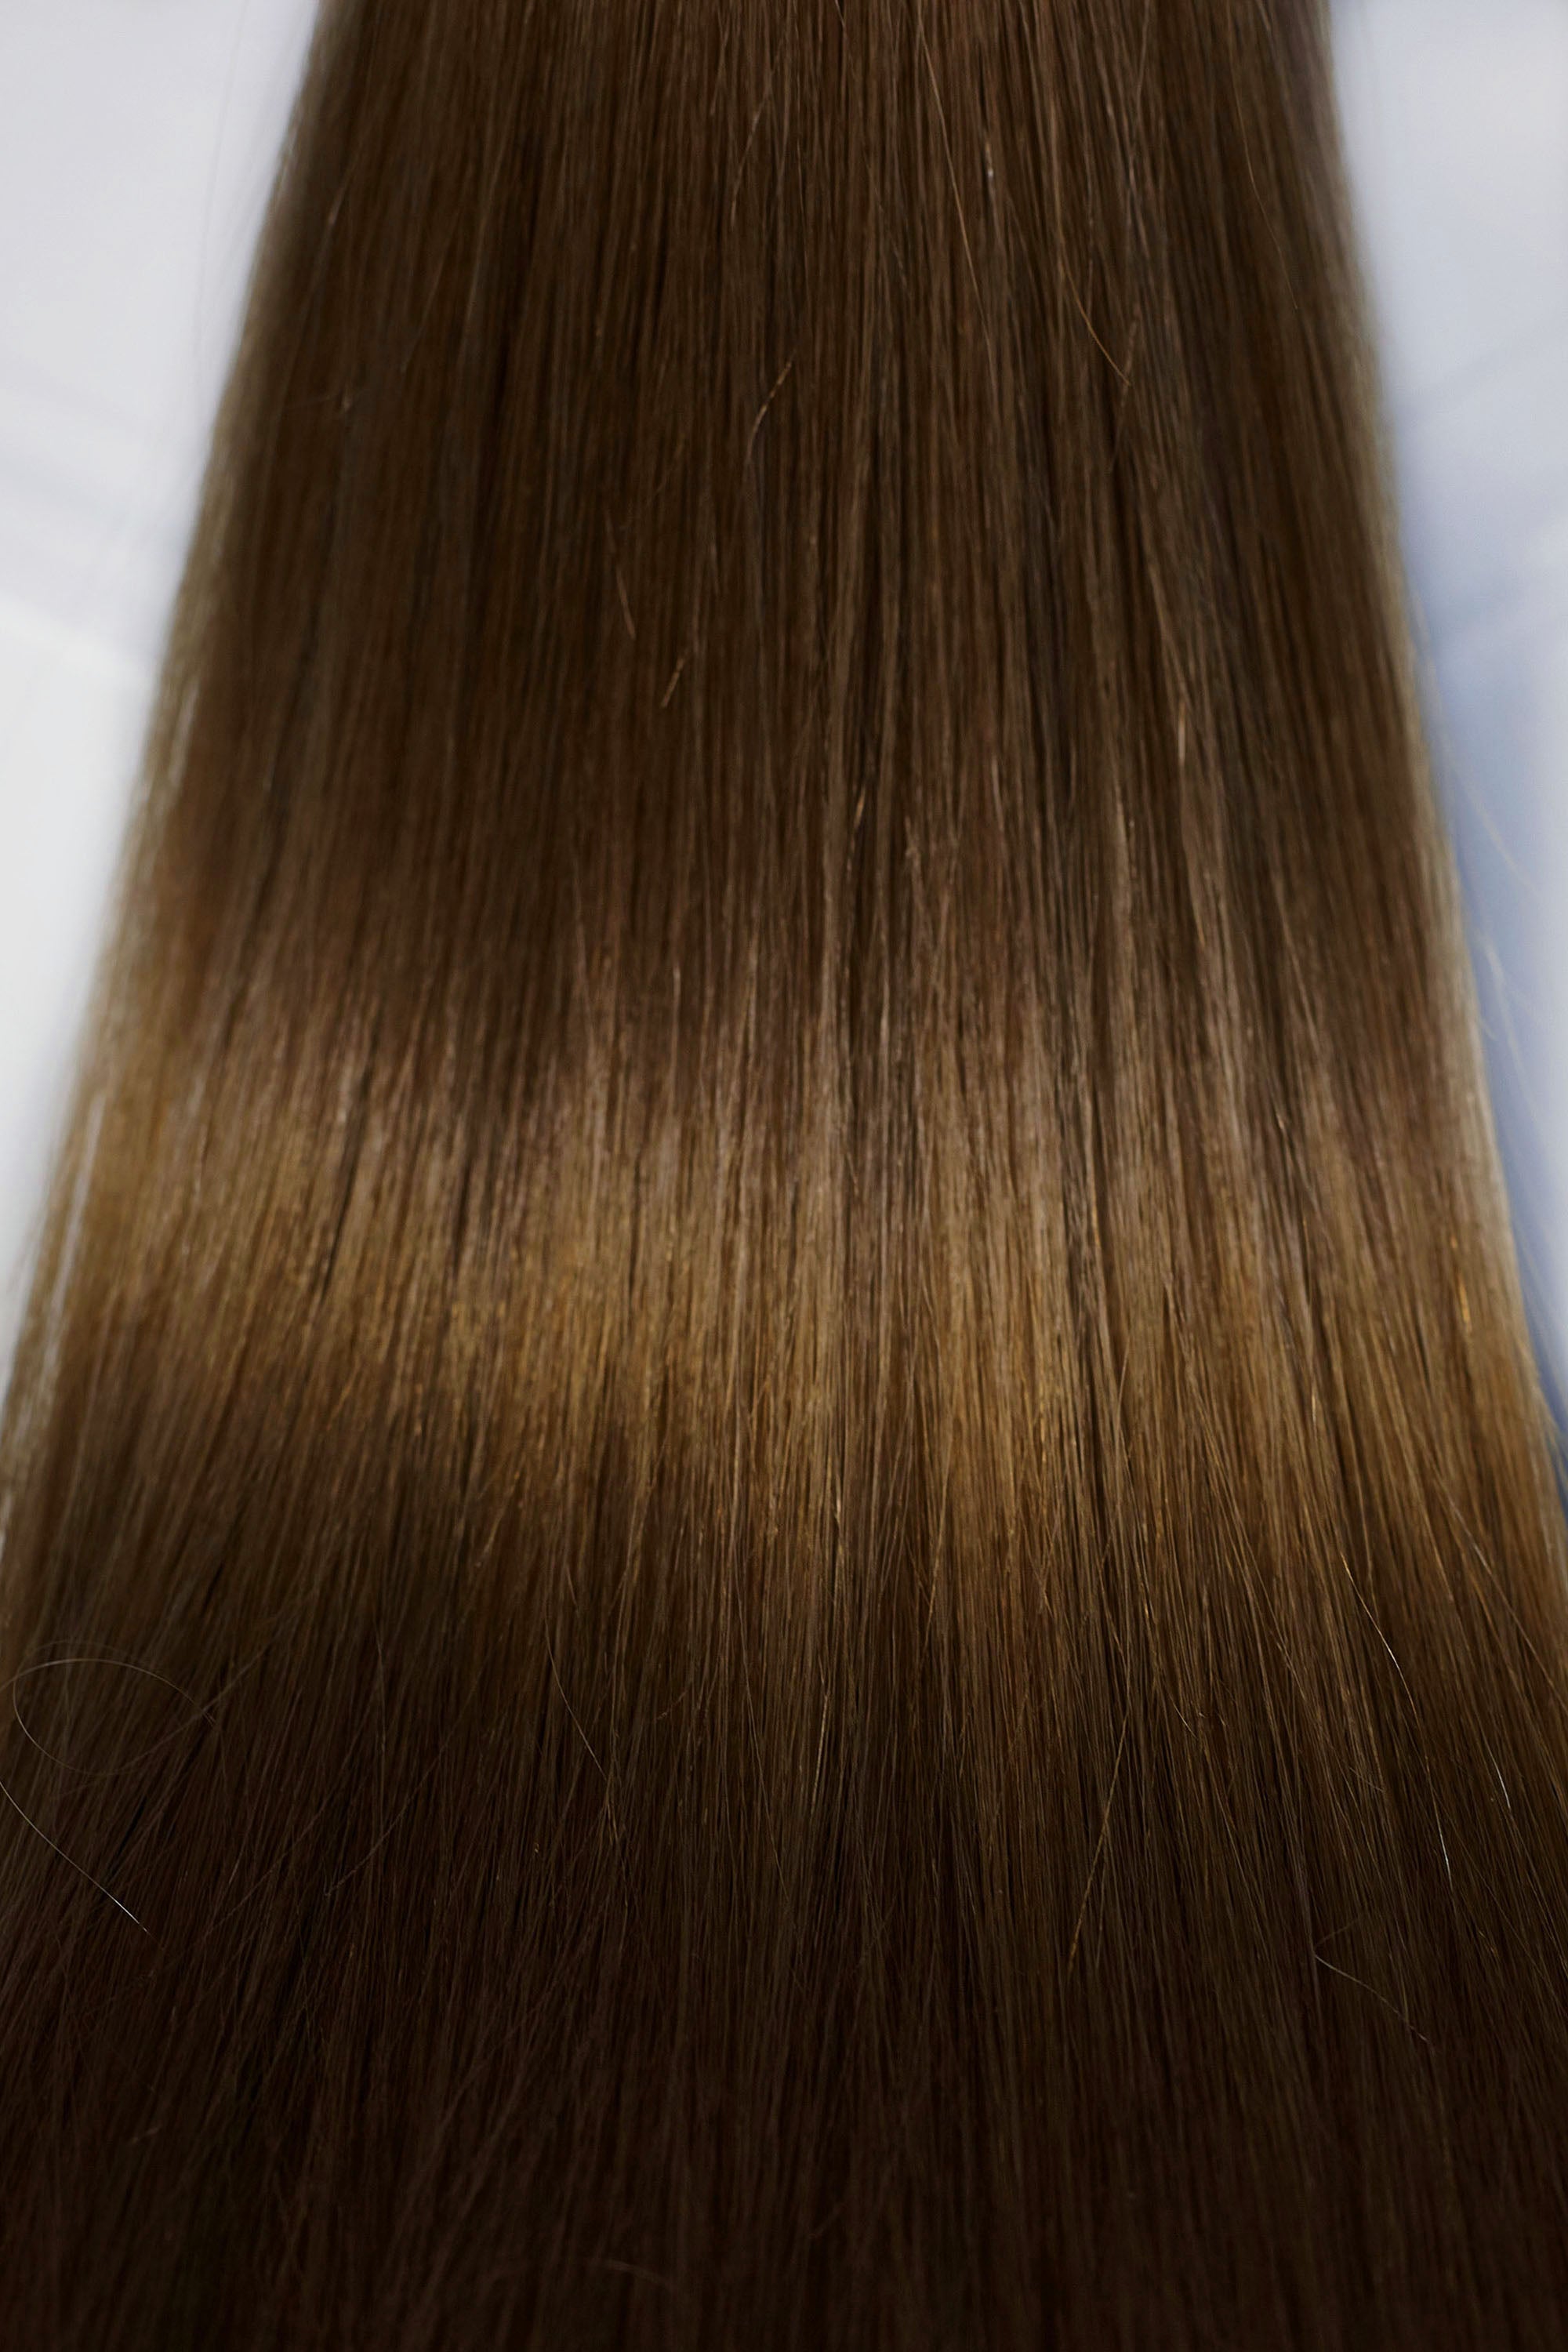 Behair professional Keratin Tip "Premium" 22" (55cm) Natural Straight Honey Walnut Brown #5 - 25g (1g each pcs) hair extensions